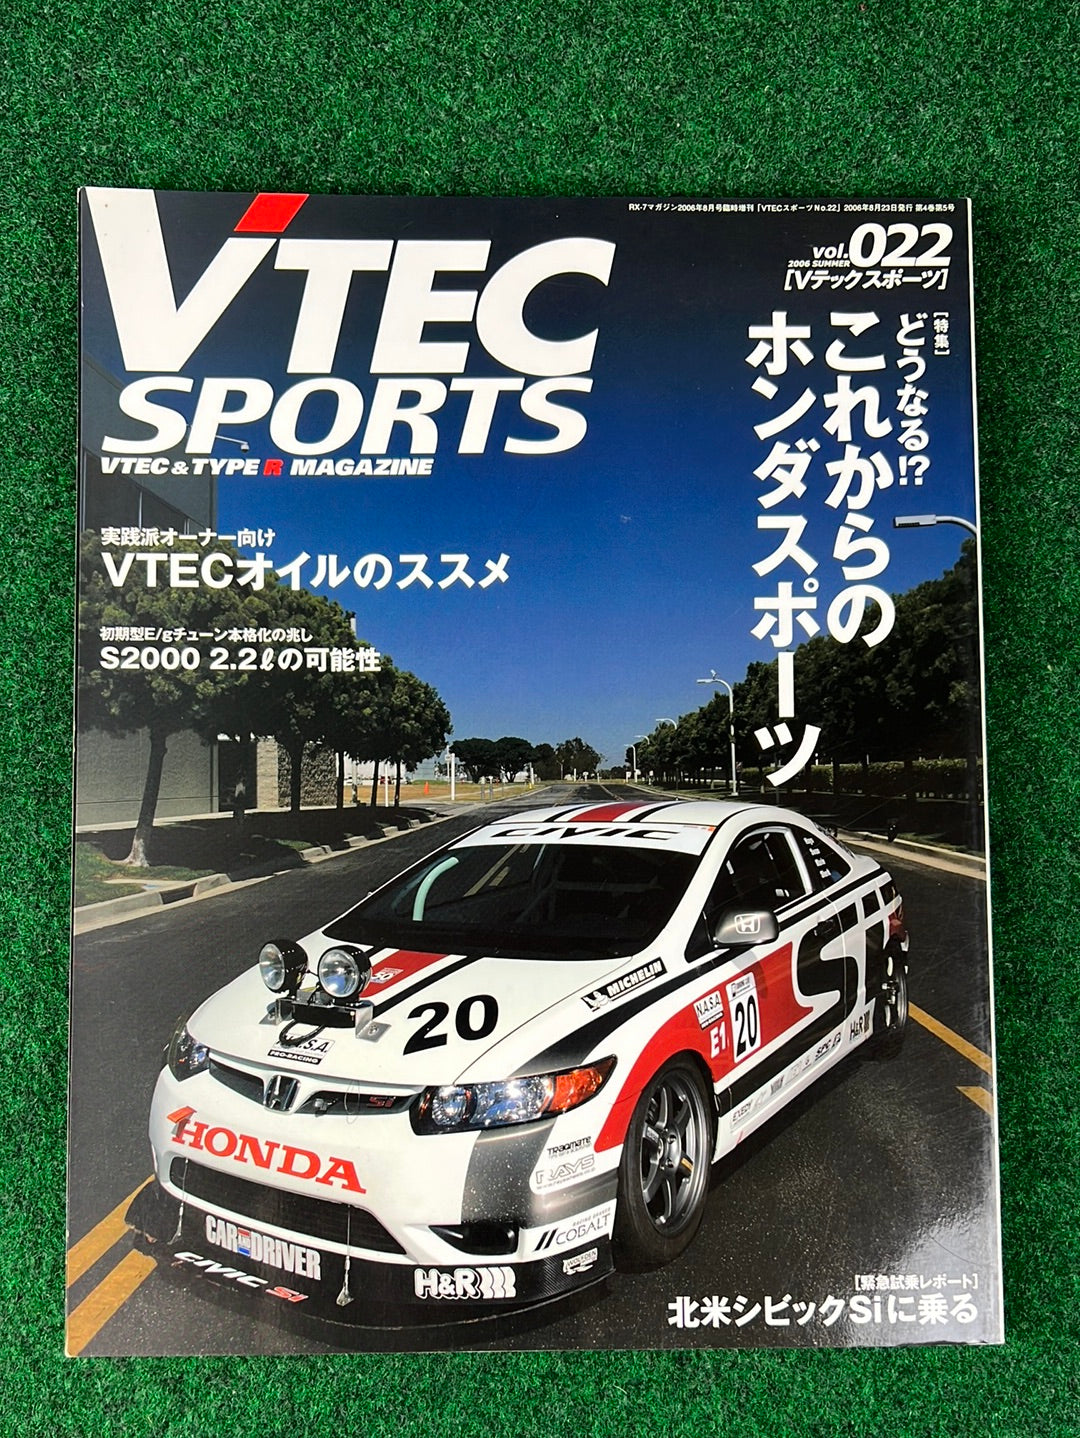 VTEC SPORTS Magazine - Vol. 22